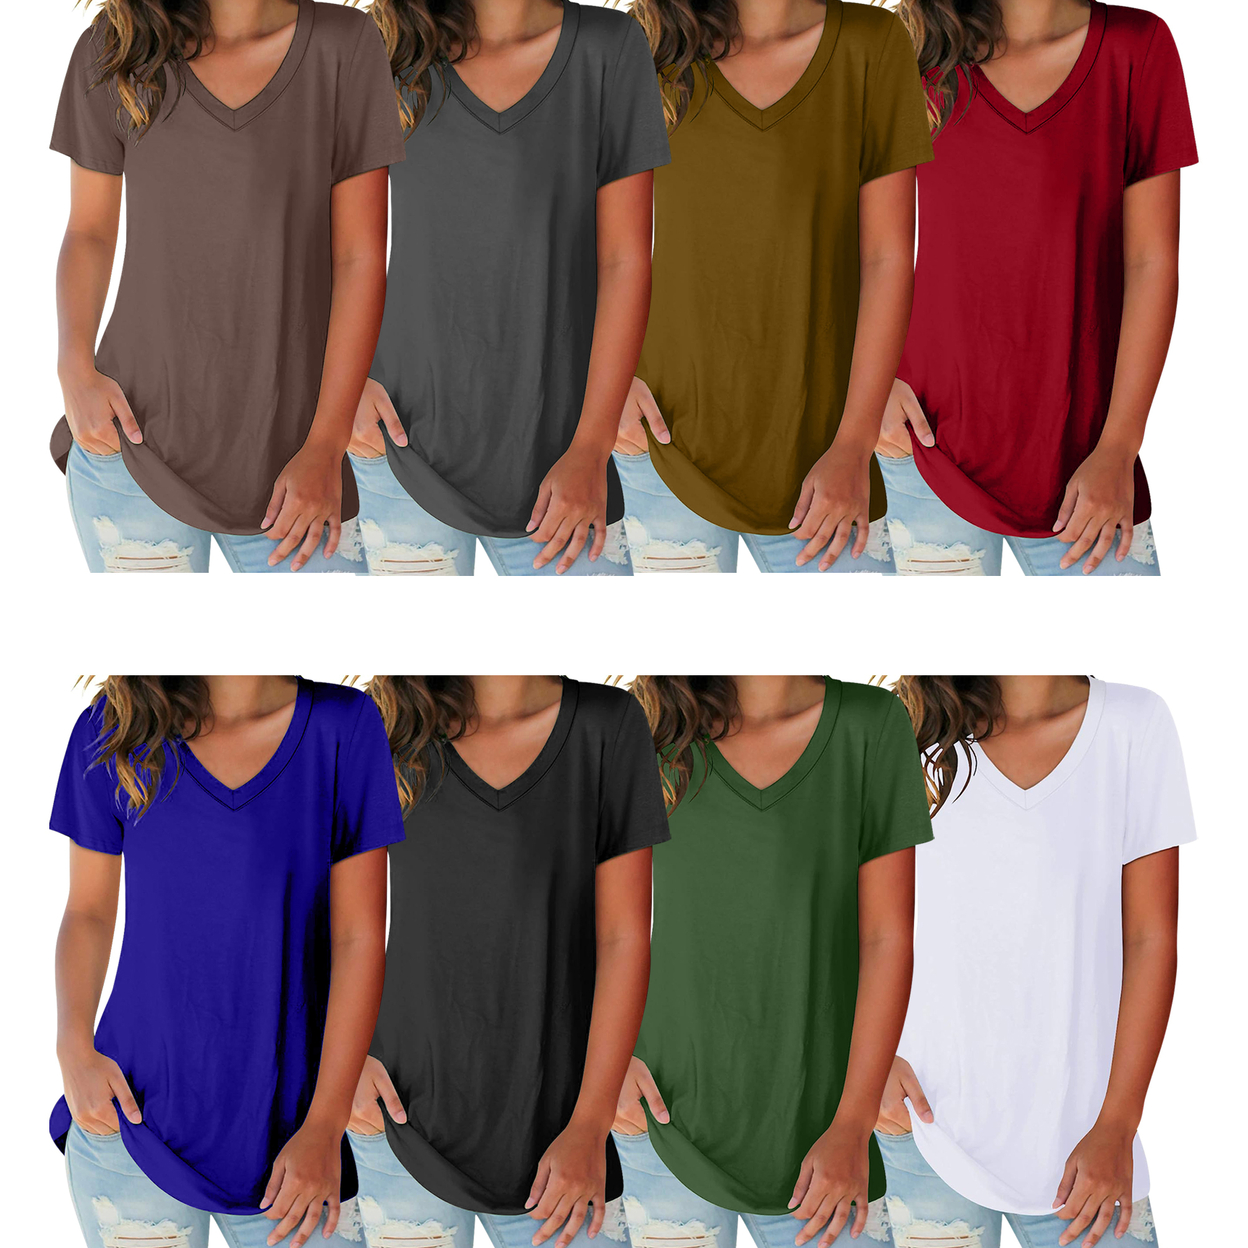 3-Pack: Women's Ultra Soft Smooth Cotton Blend Basic V-Neck Short Sleeve Shirts - Black, White, Green, X-large